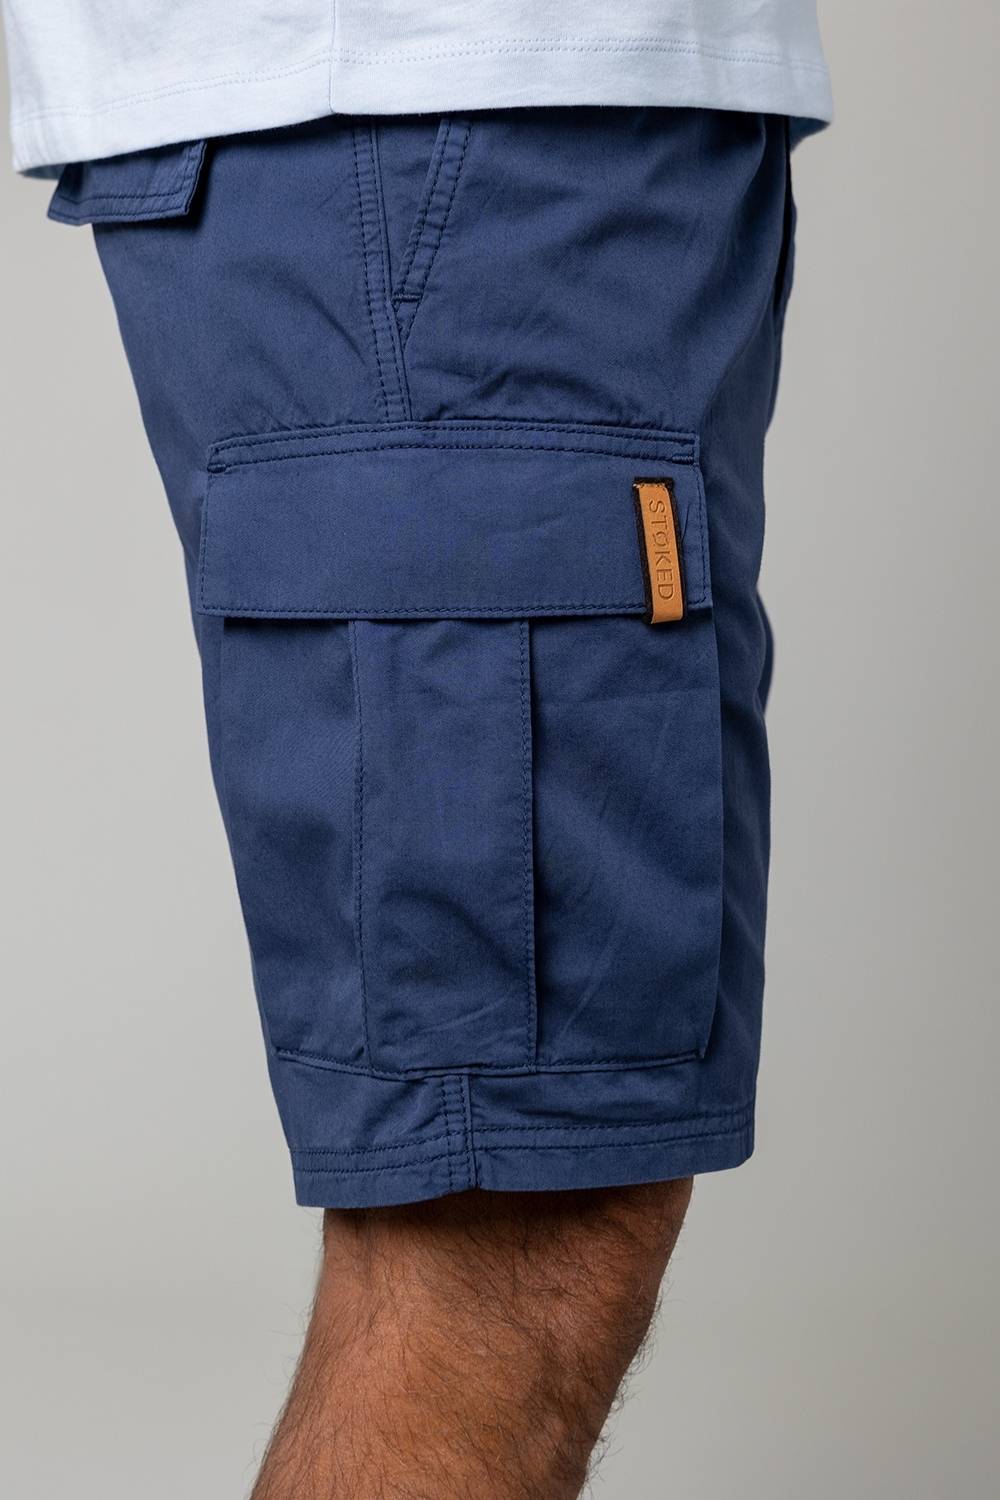 Short / homme / cargo short / coton / poches latérales / bleu / navy